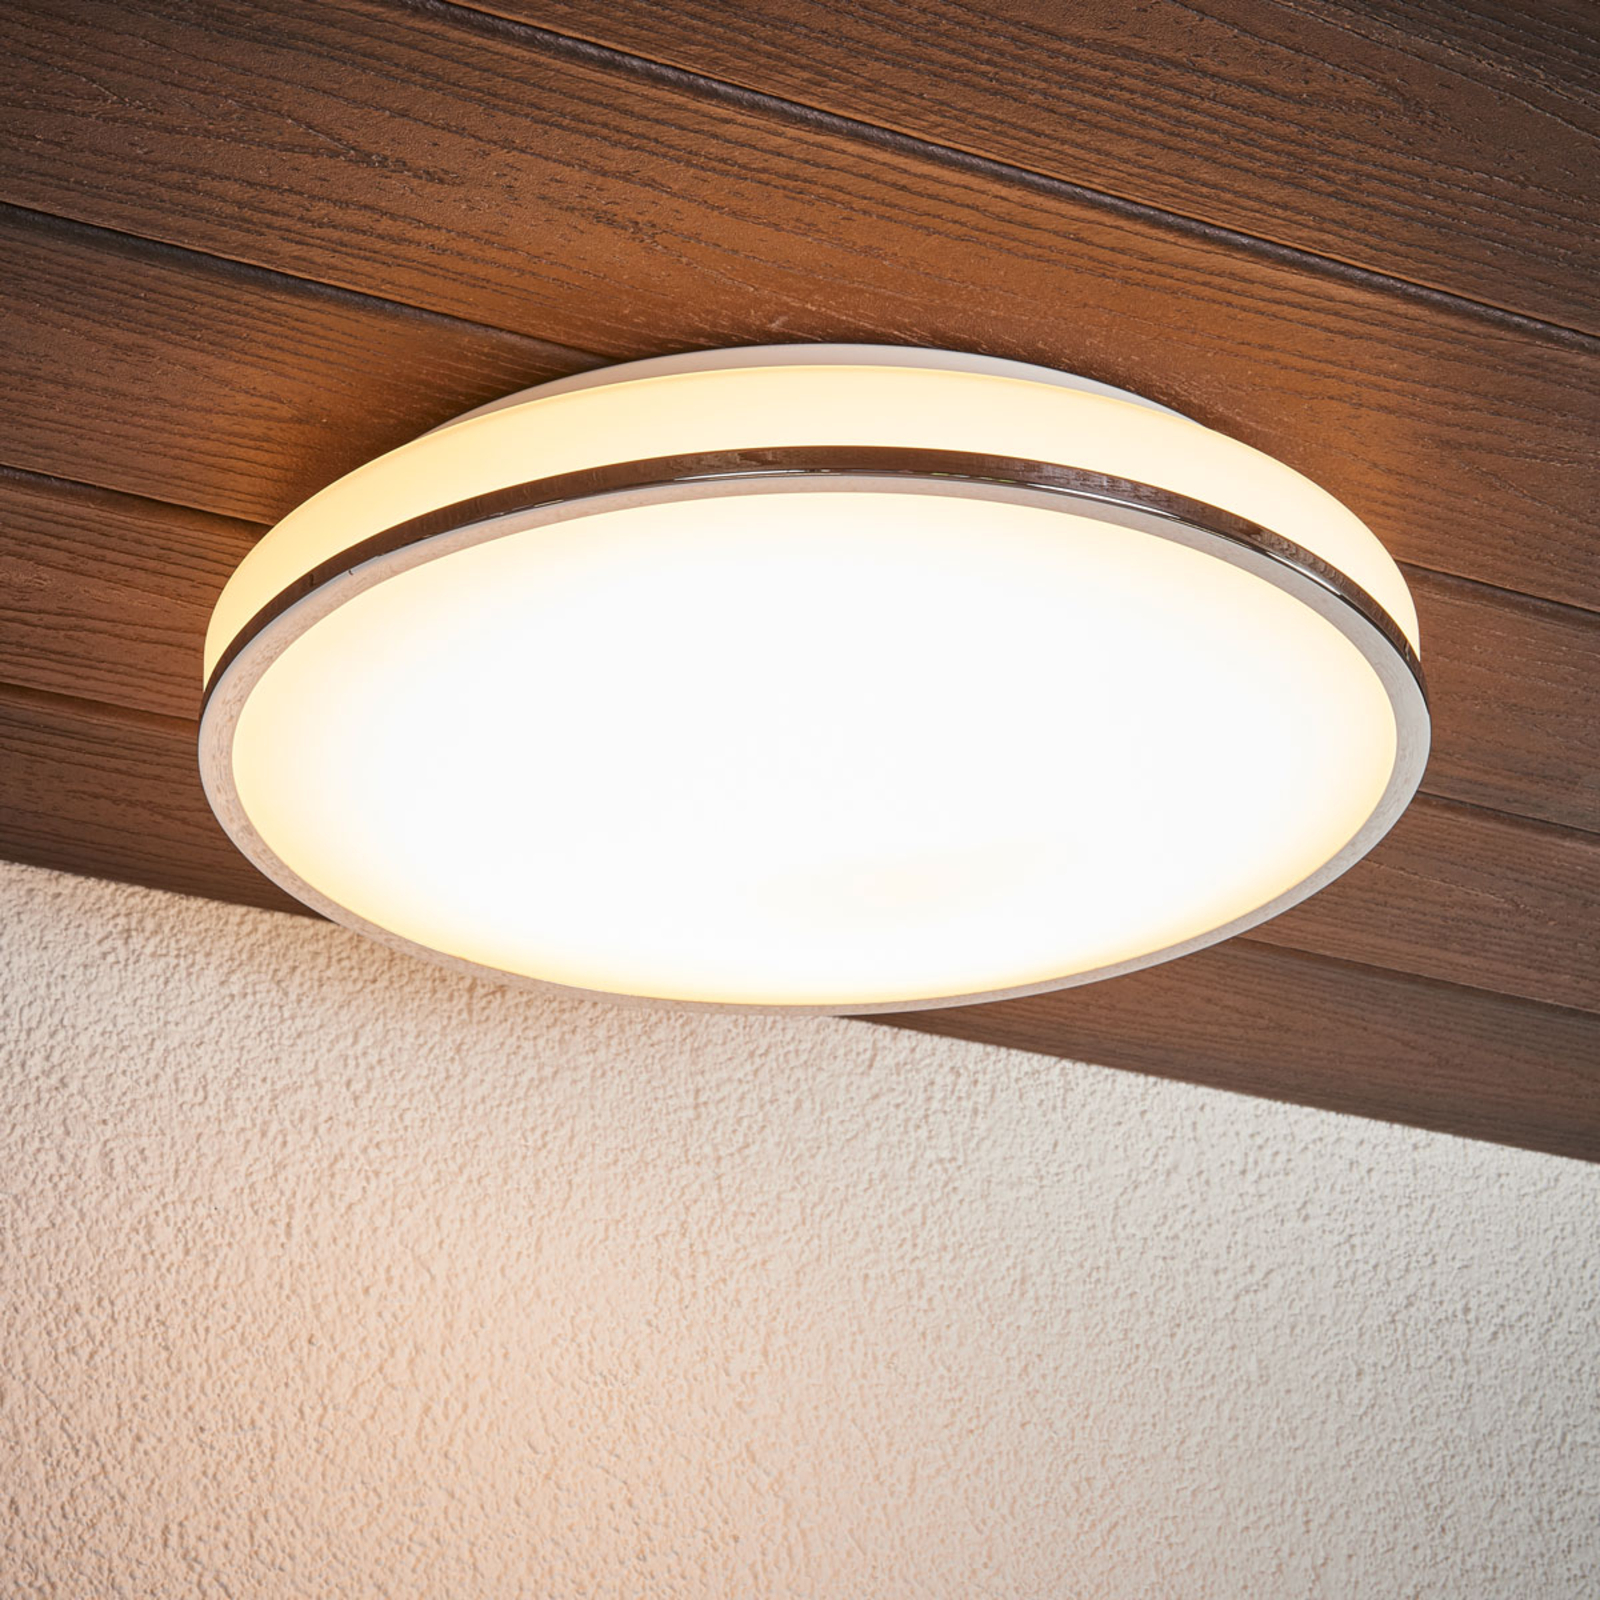 Bathroom light Lyss, LEDs and a good light output